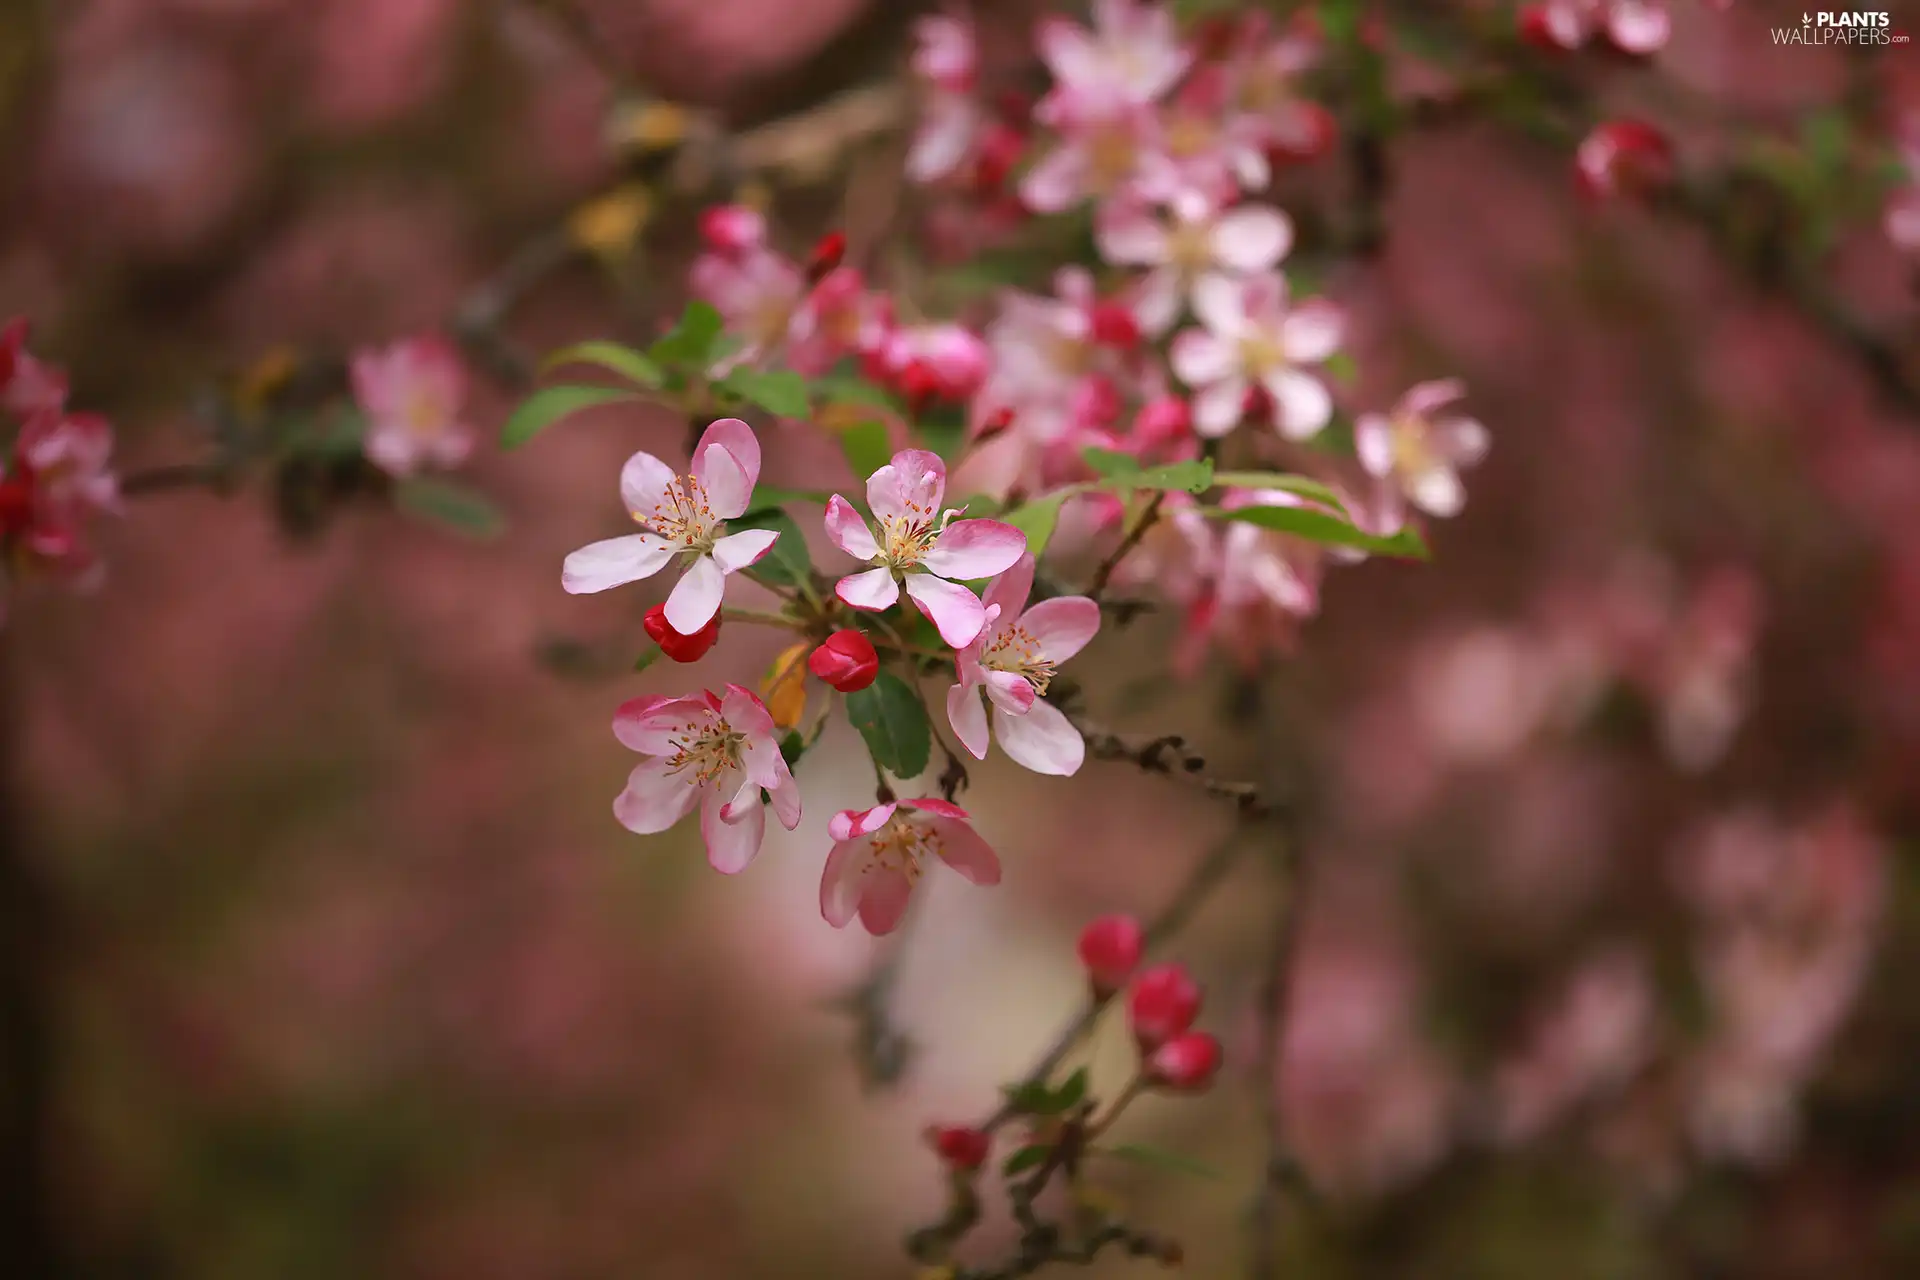 Flowers, twig, apple-tree, blurry background, Fruit Tree, Pink